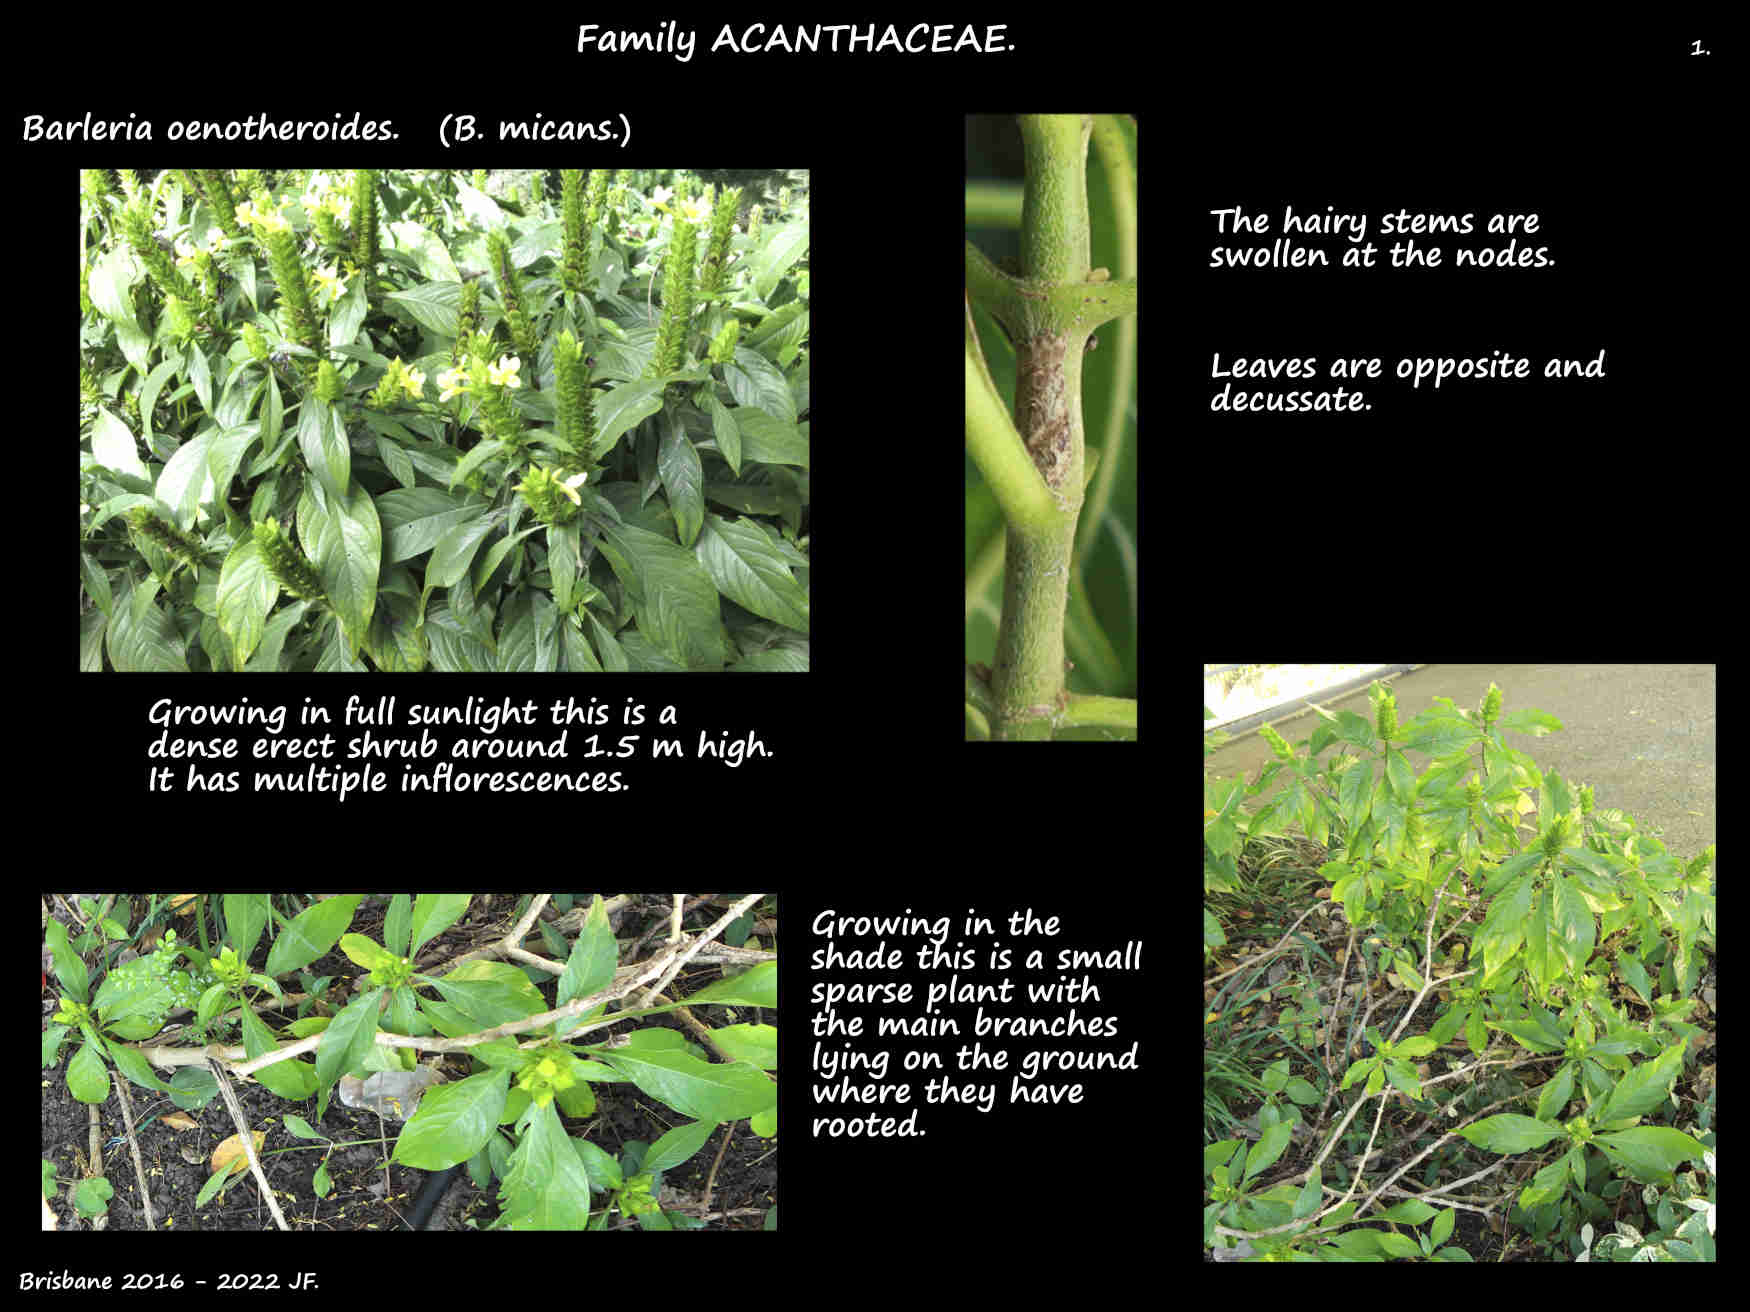 1 Barleria oenotheroides plants & stems